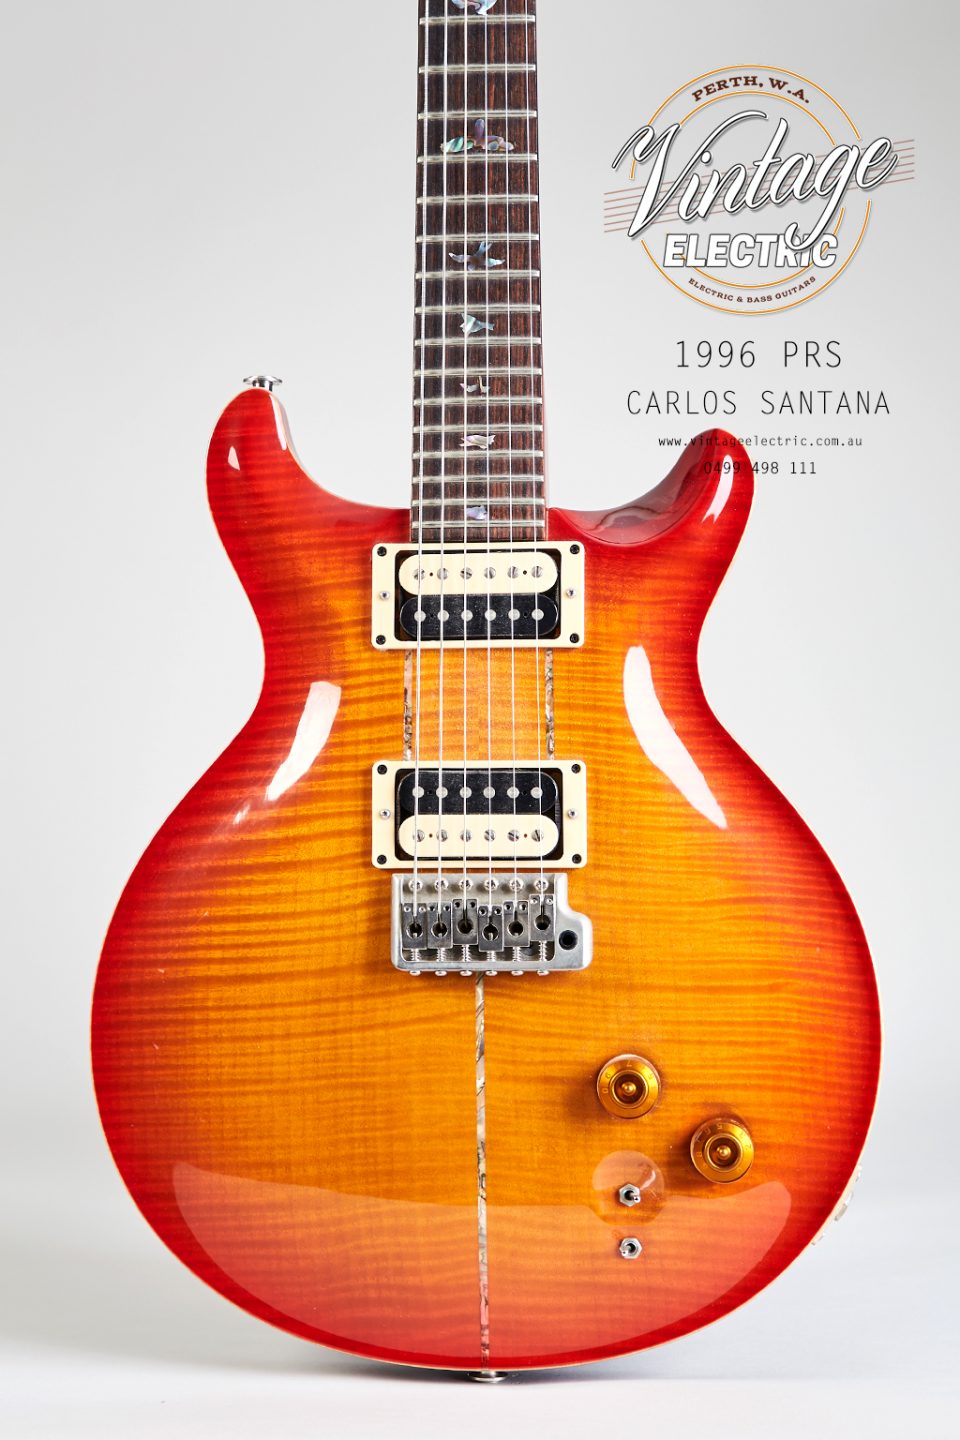 1996 Paul Reed Smith Santana Guitar | Vintage Electric